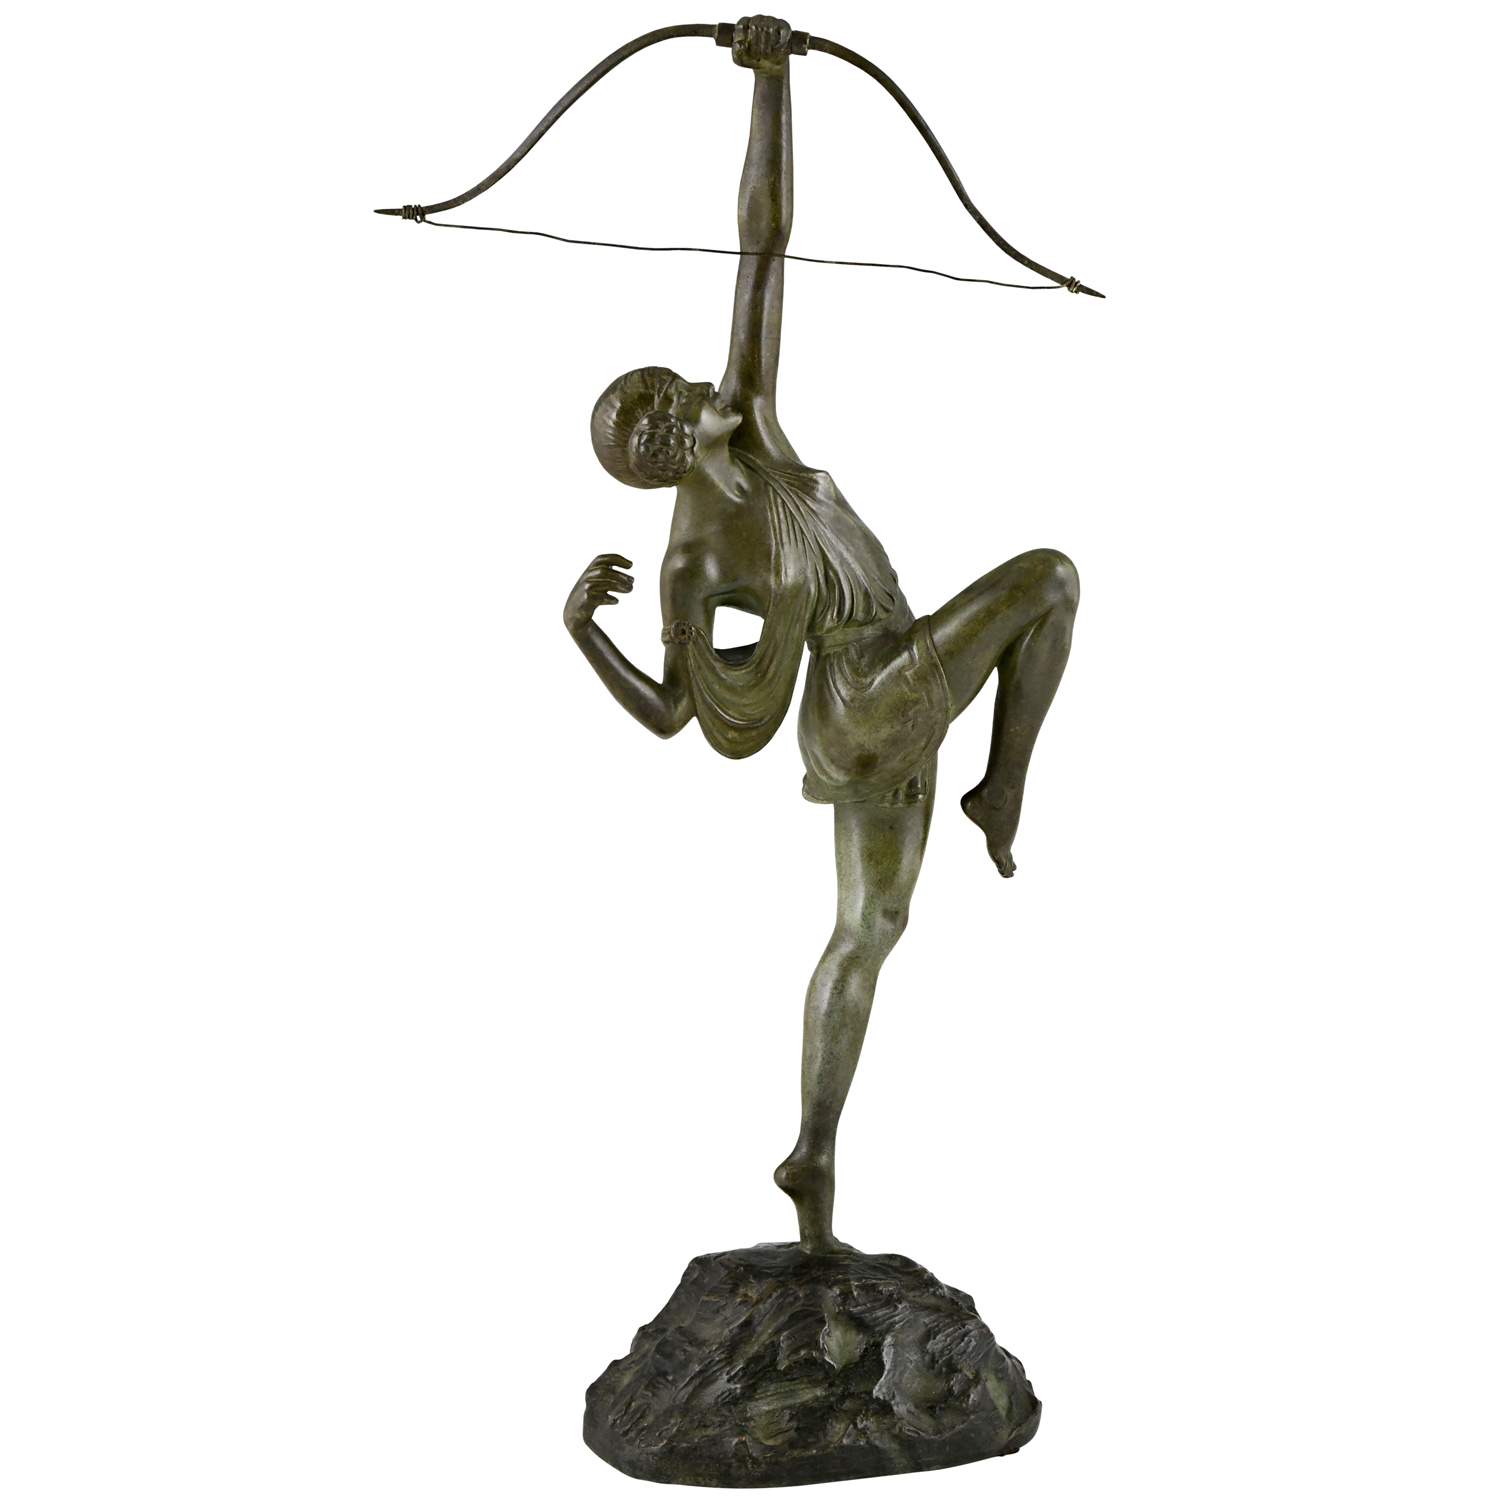 Art Deco bronze sculpture Diana Le Faguays - 1